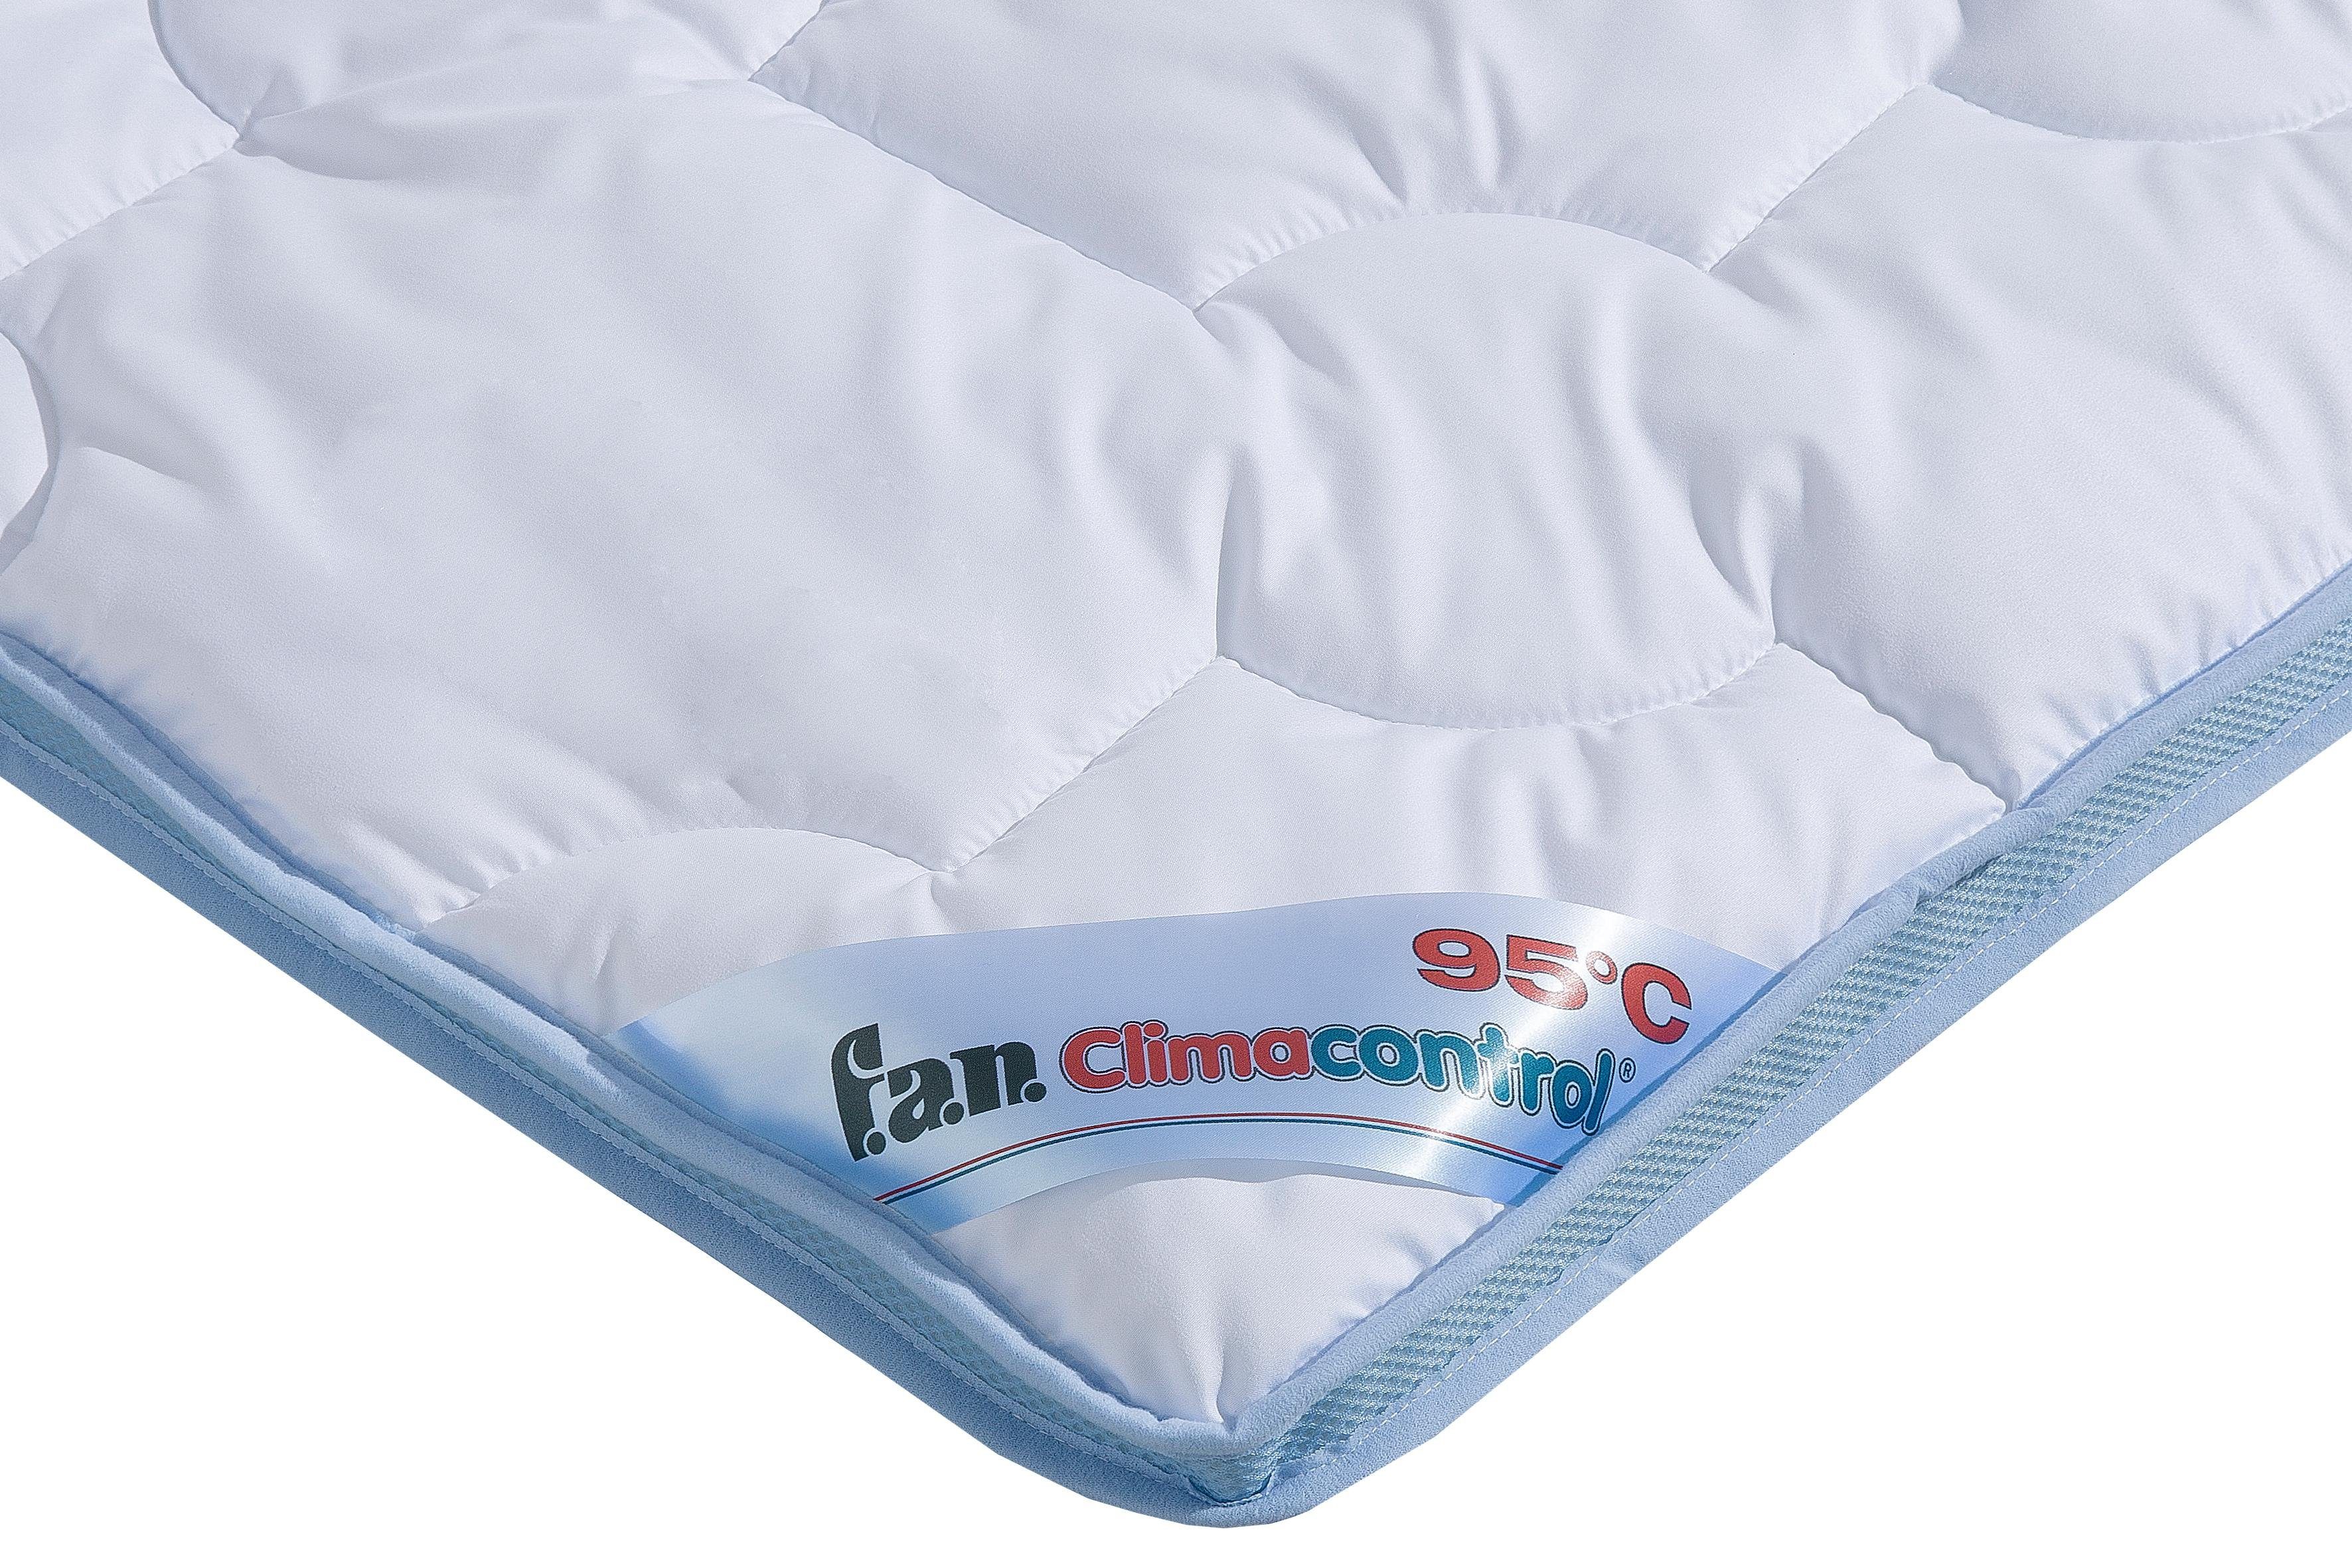 Klimafunktion Schlafkomfort, f.a.n. Lüftungsband Microfaserbettdecke, Climacontrol®, durch optimierte